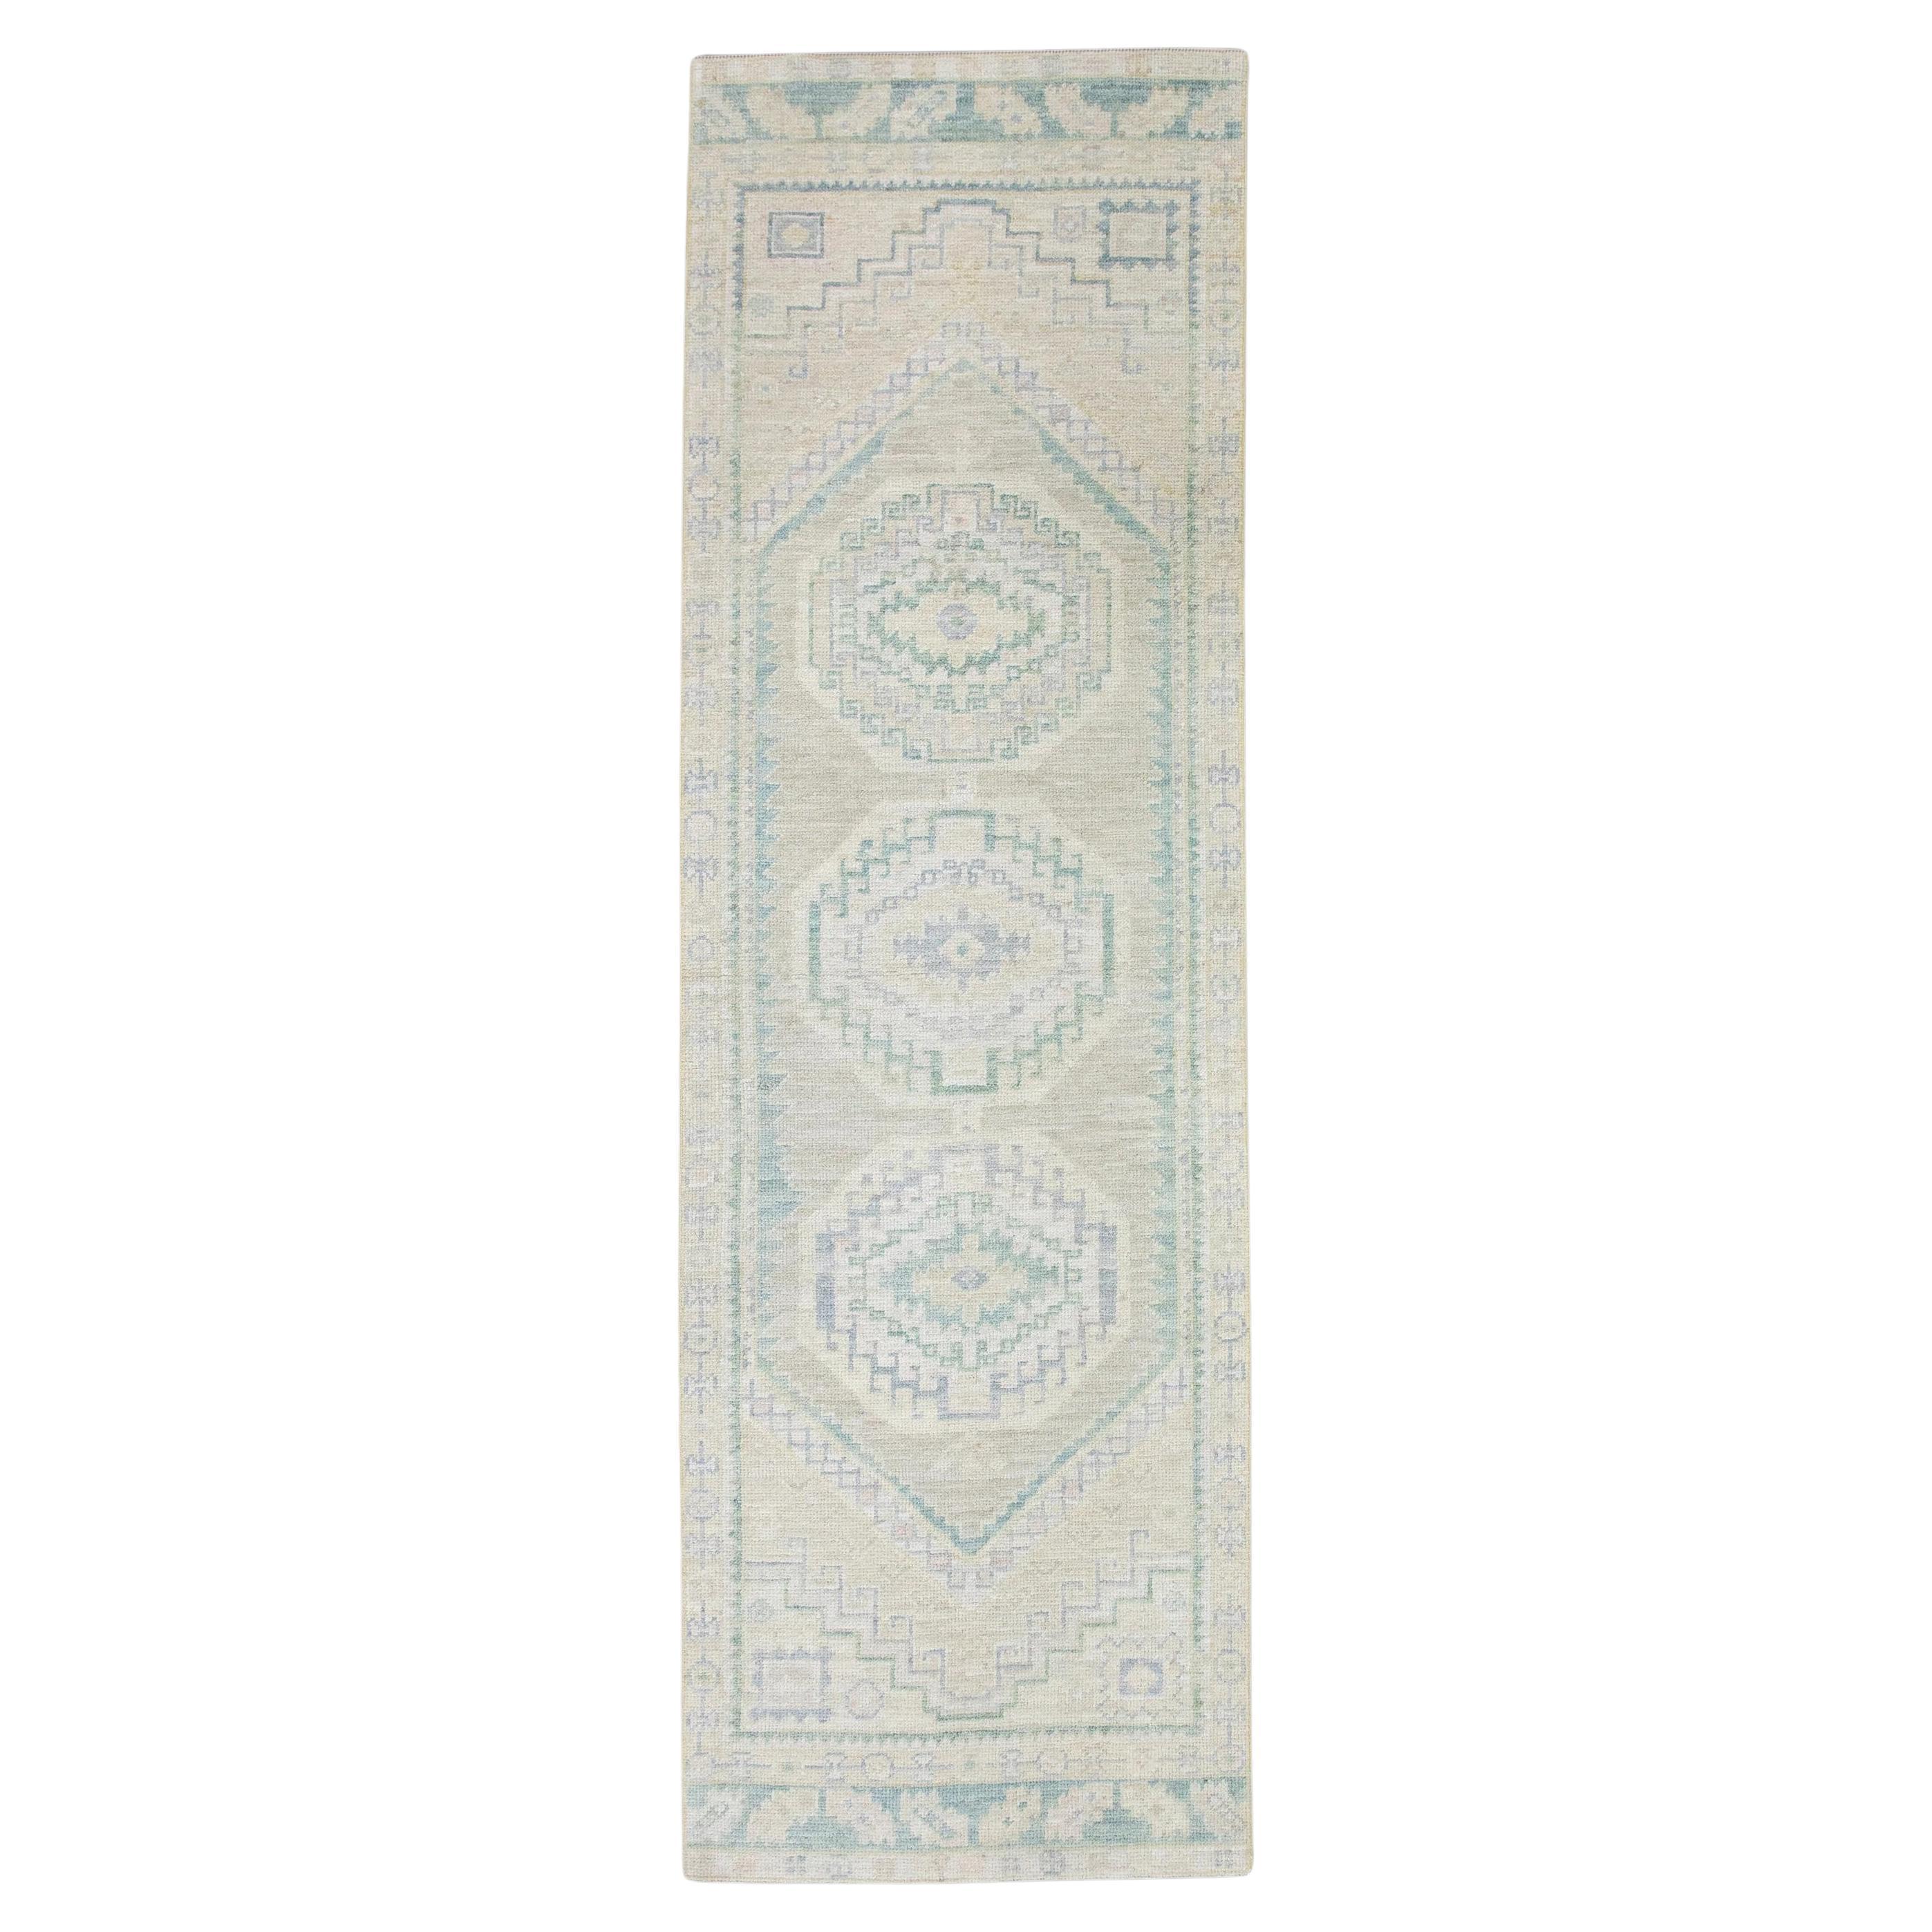 Medallion Design Handwoven Wool Turkish Oushak Rug in Blue & Green 2'10" x 9'5" For Sale